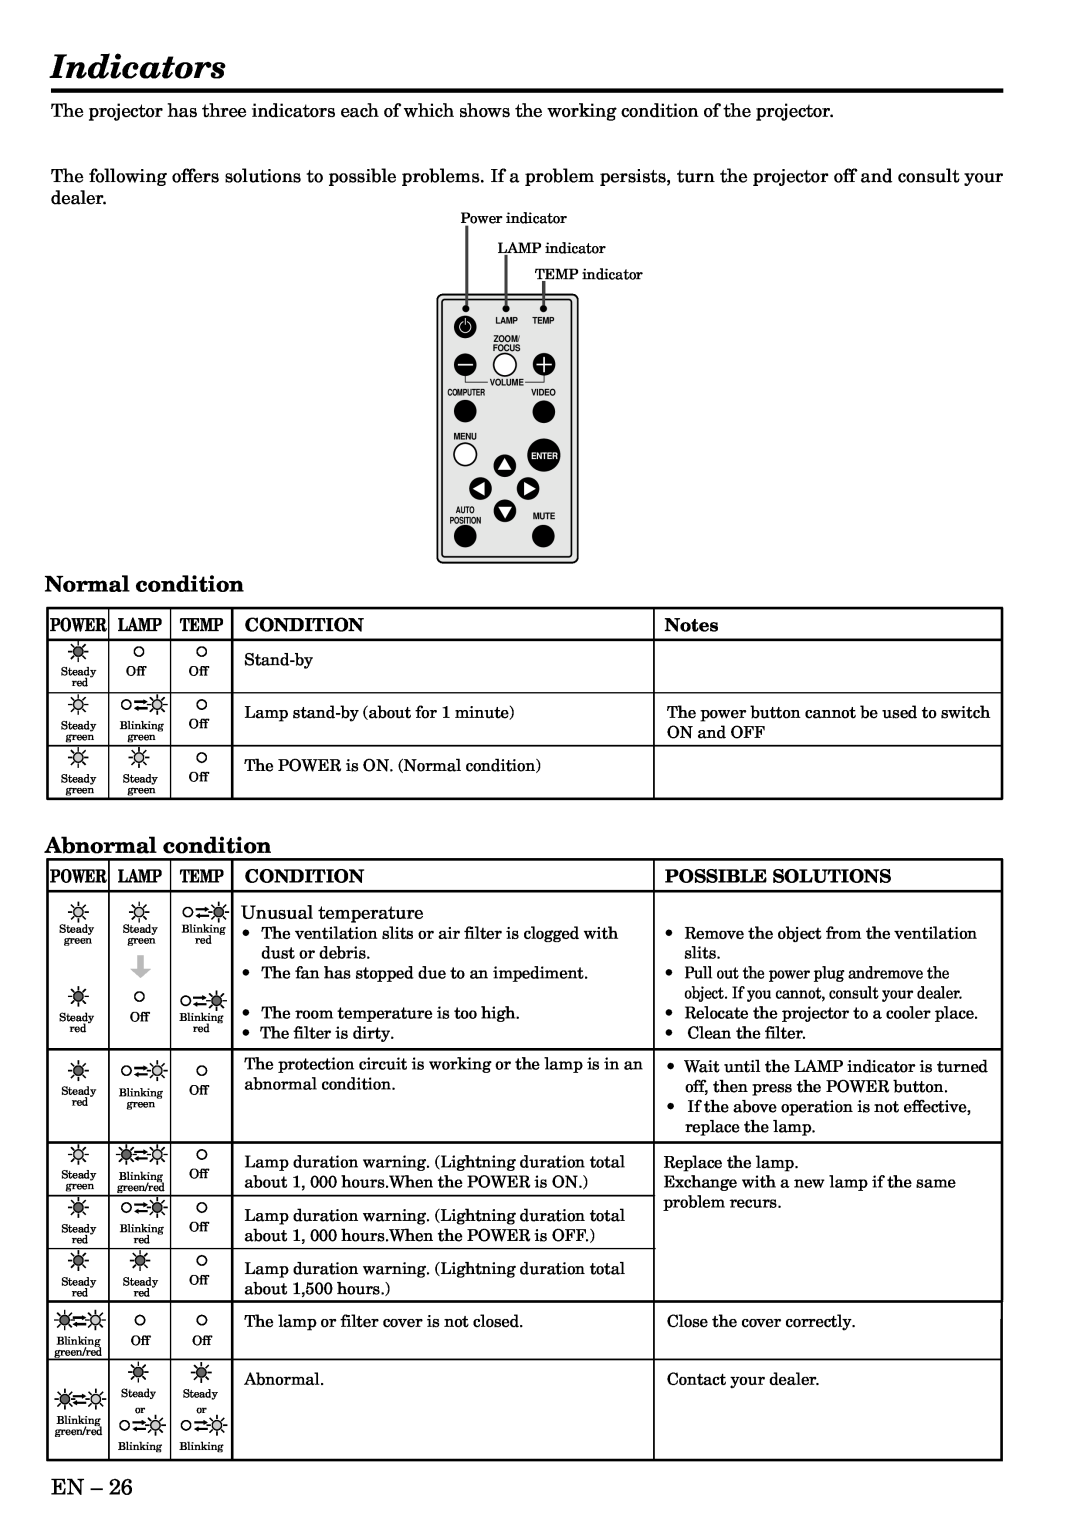 Mitsubishi Electronics LVP-X400U user manual Indicators, Normal condition, Abnormal condition, Power Lamp, Temp Condition 